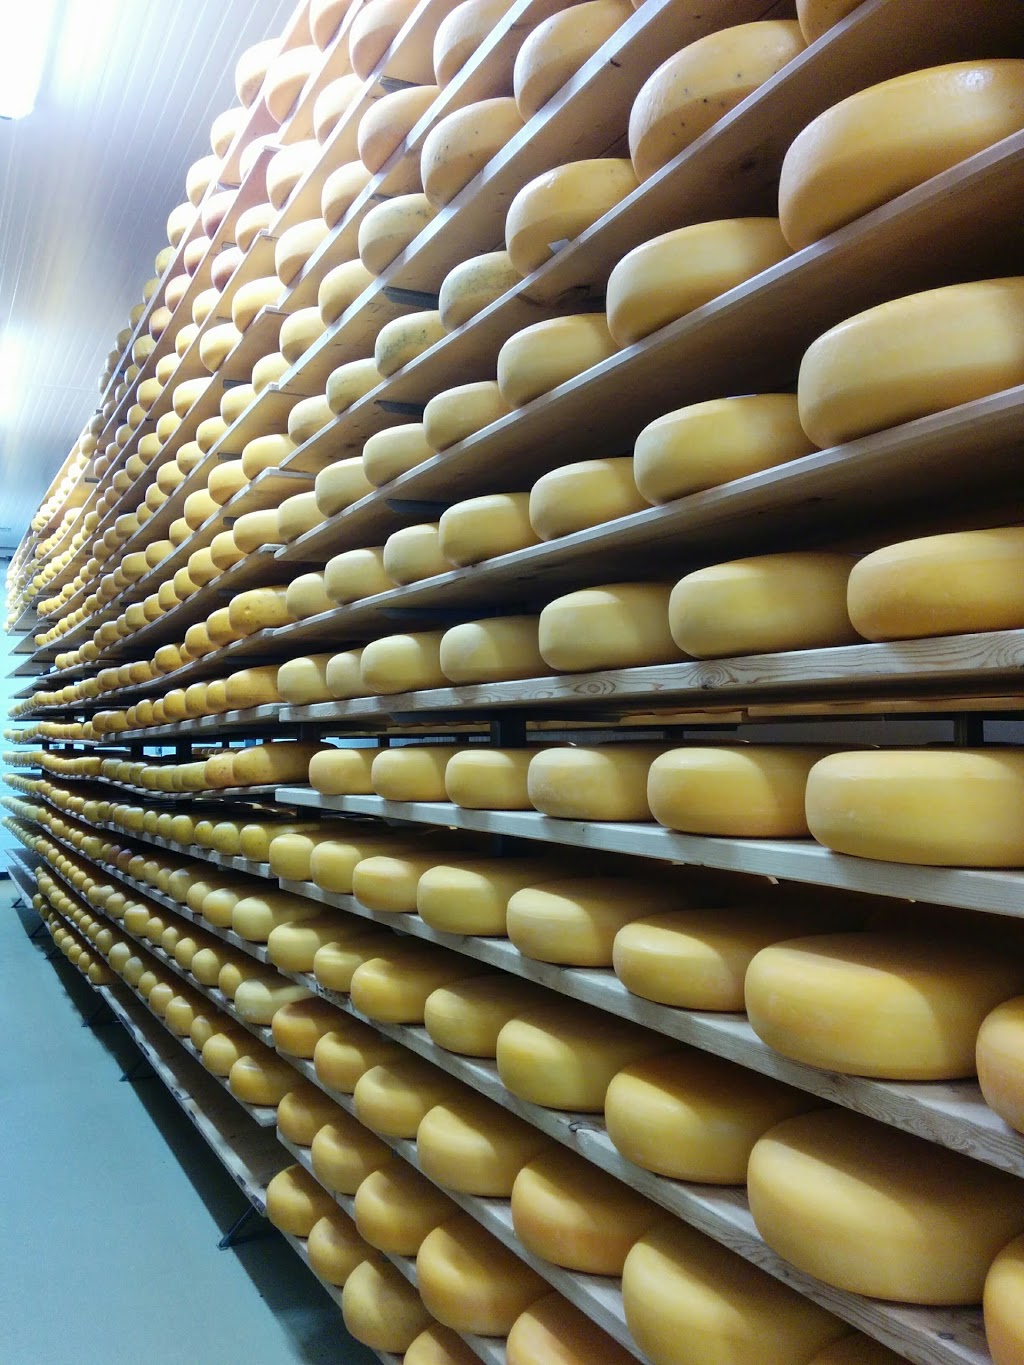 Mountainoak Cheese | 3165 Huron Rd, New Hamburg, ON N3A 3C3, Canada | Phone: (519) 662-4967